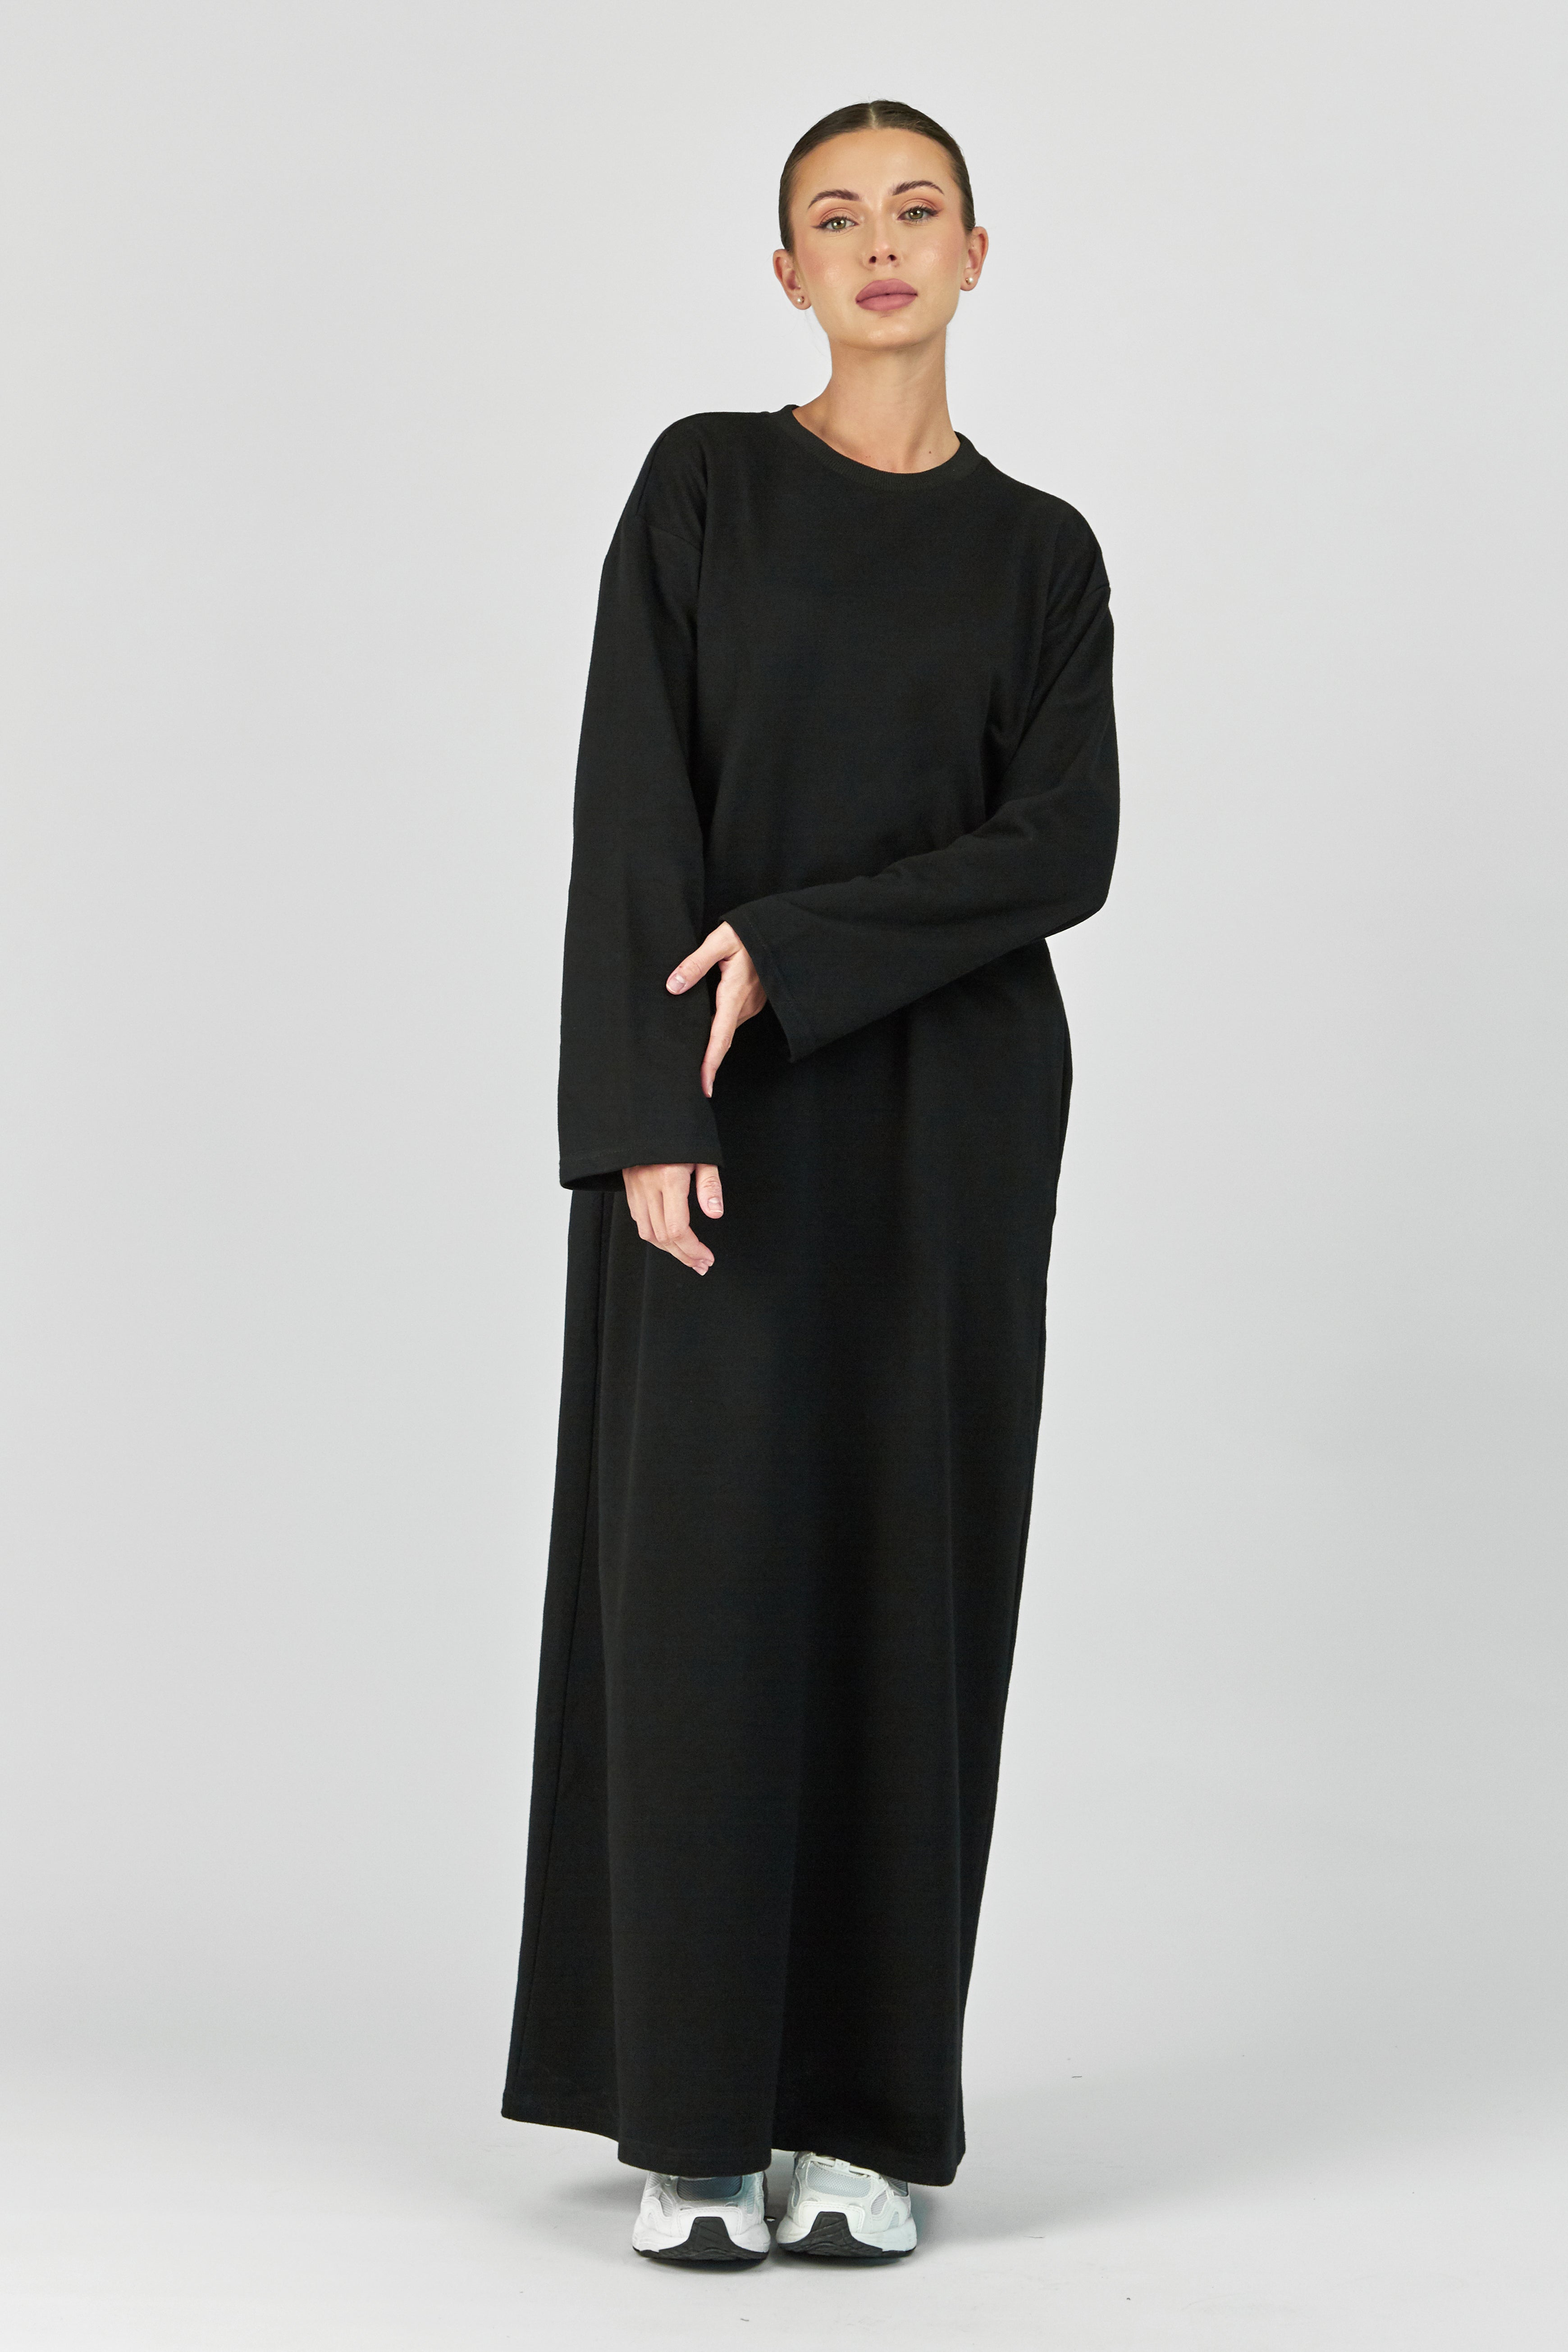 US - Wide Sleeve Sweatshirt Dress - Black